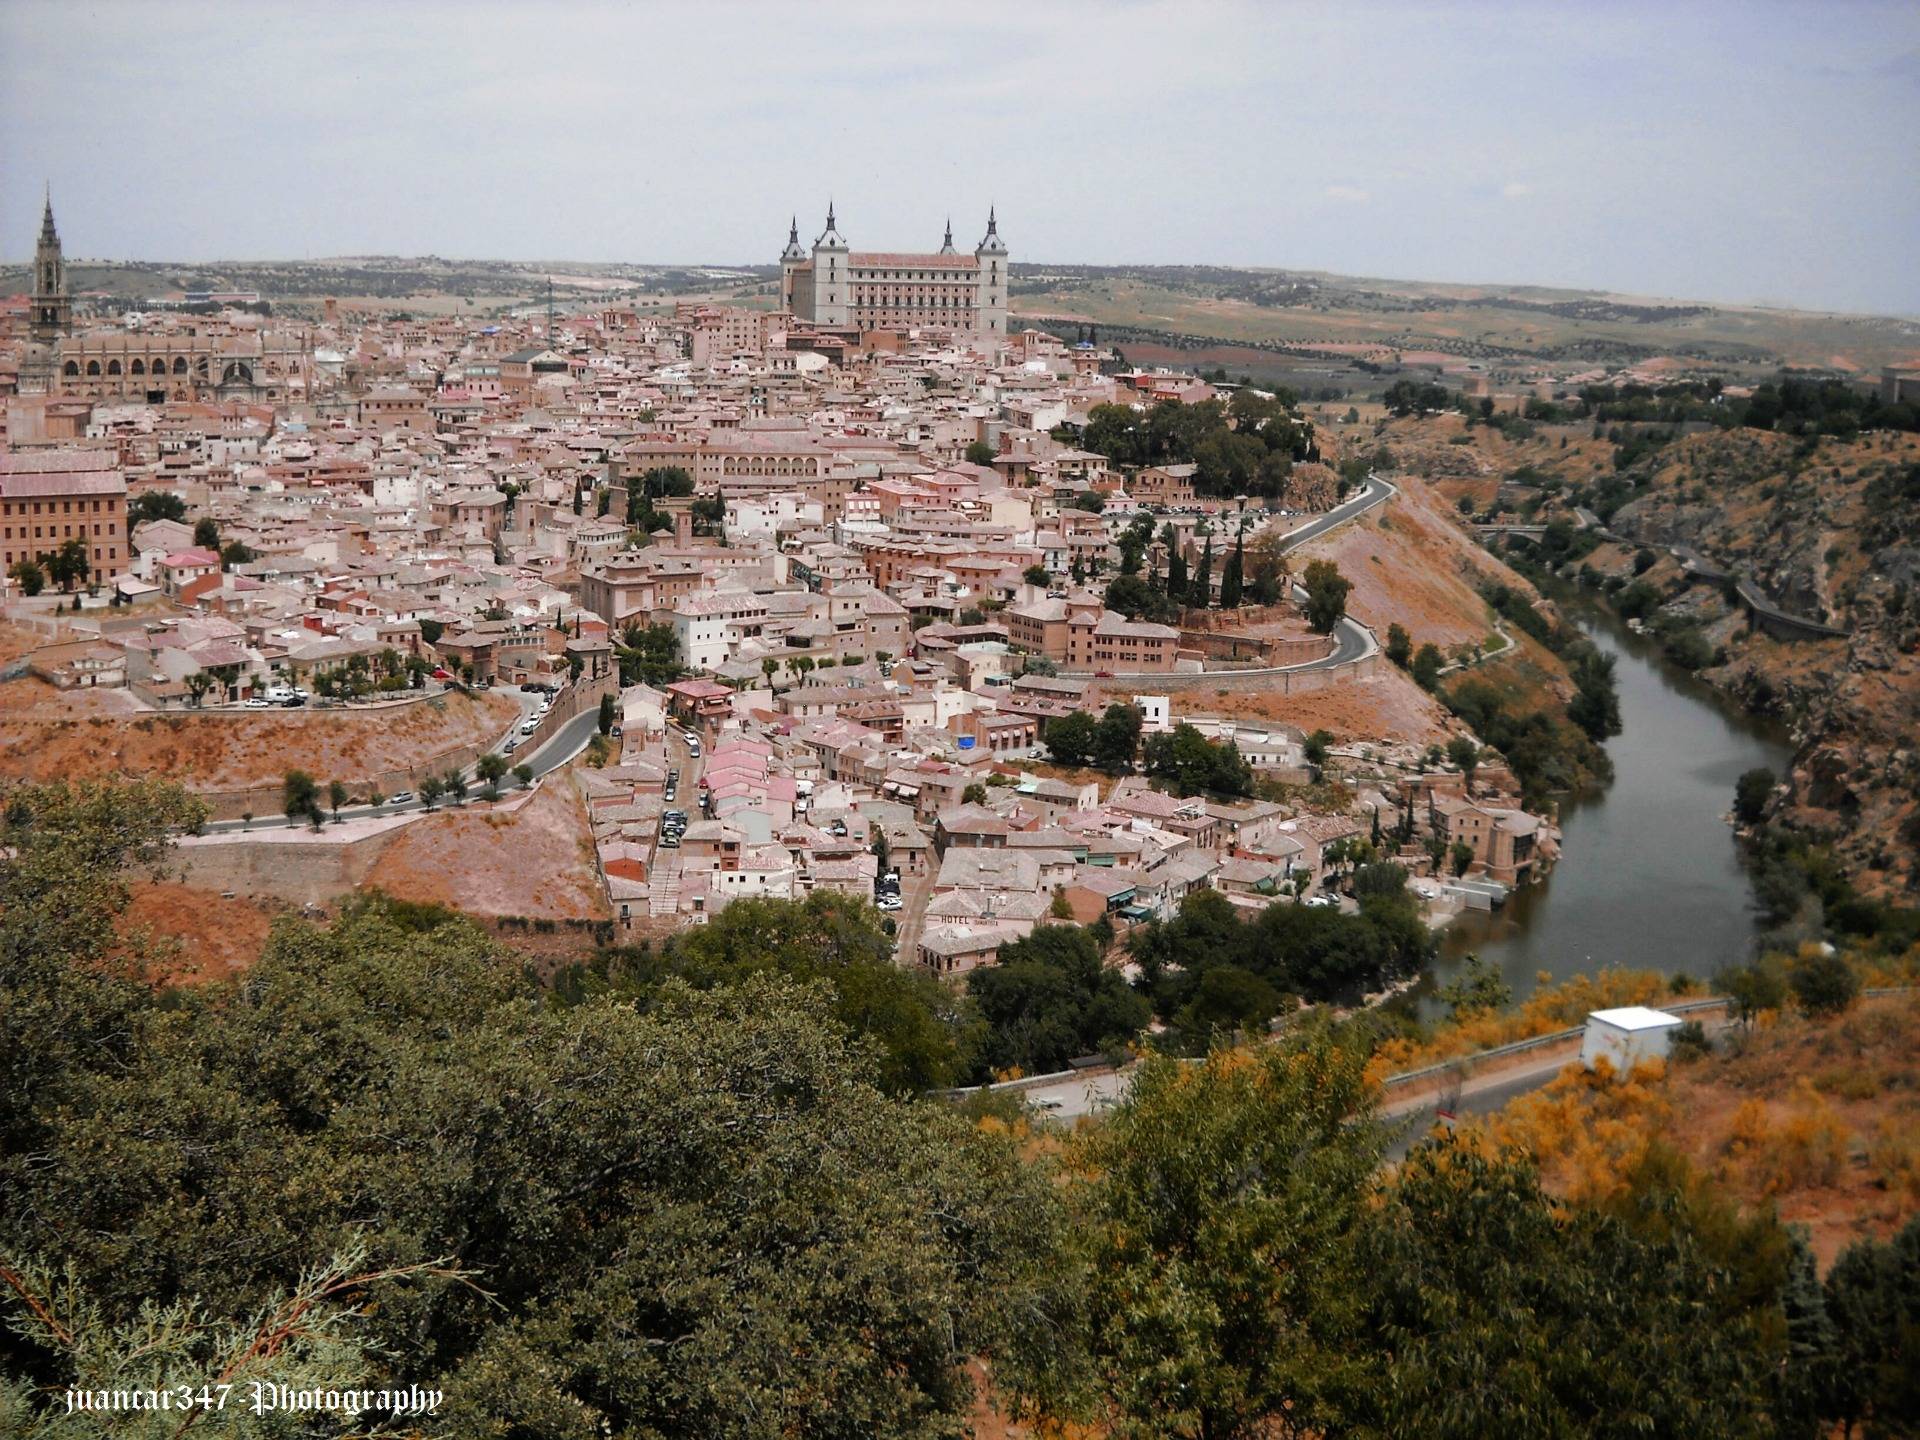 Toledo: capital of forgotten empires